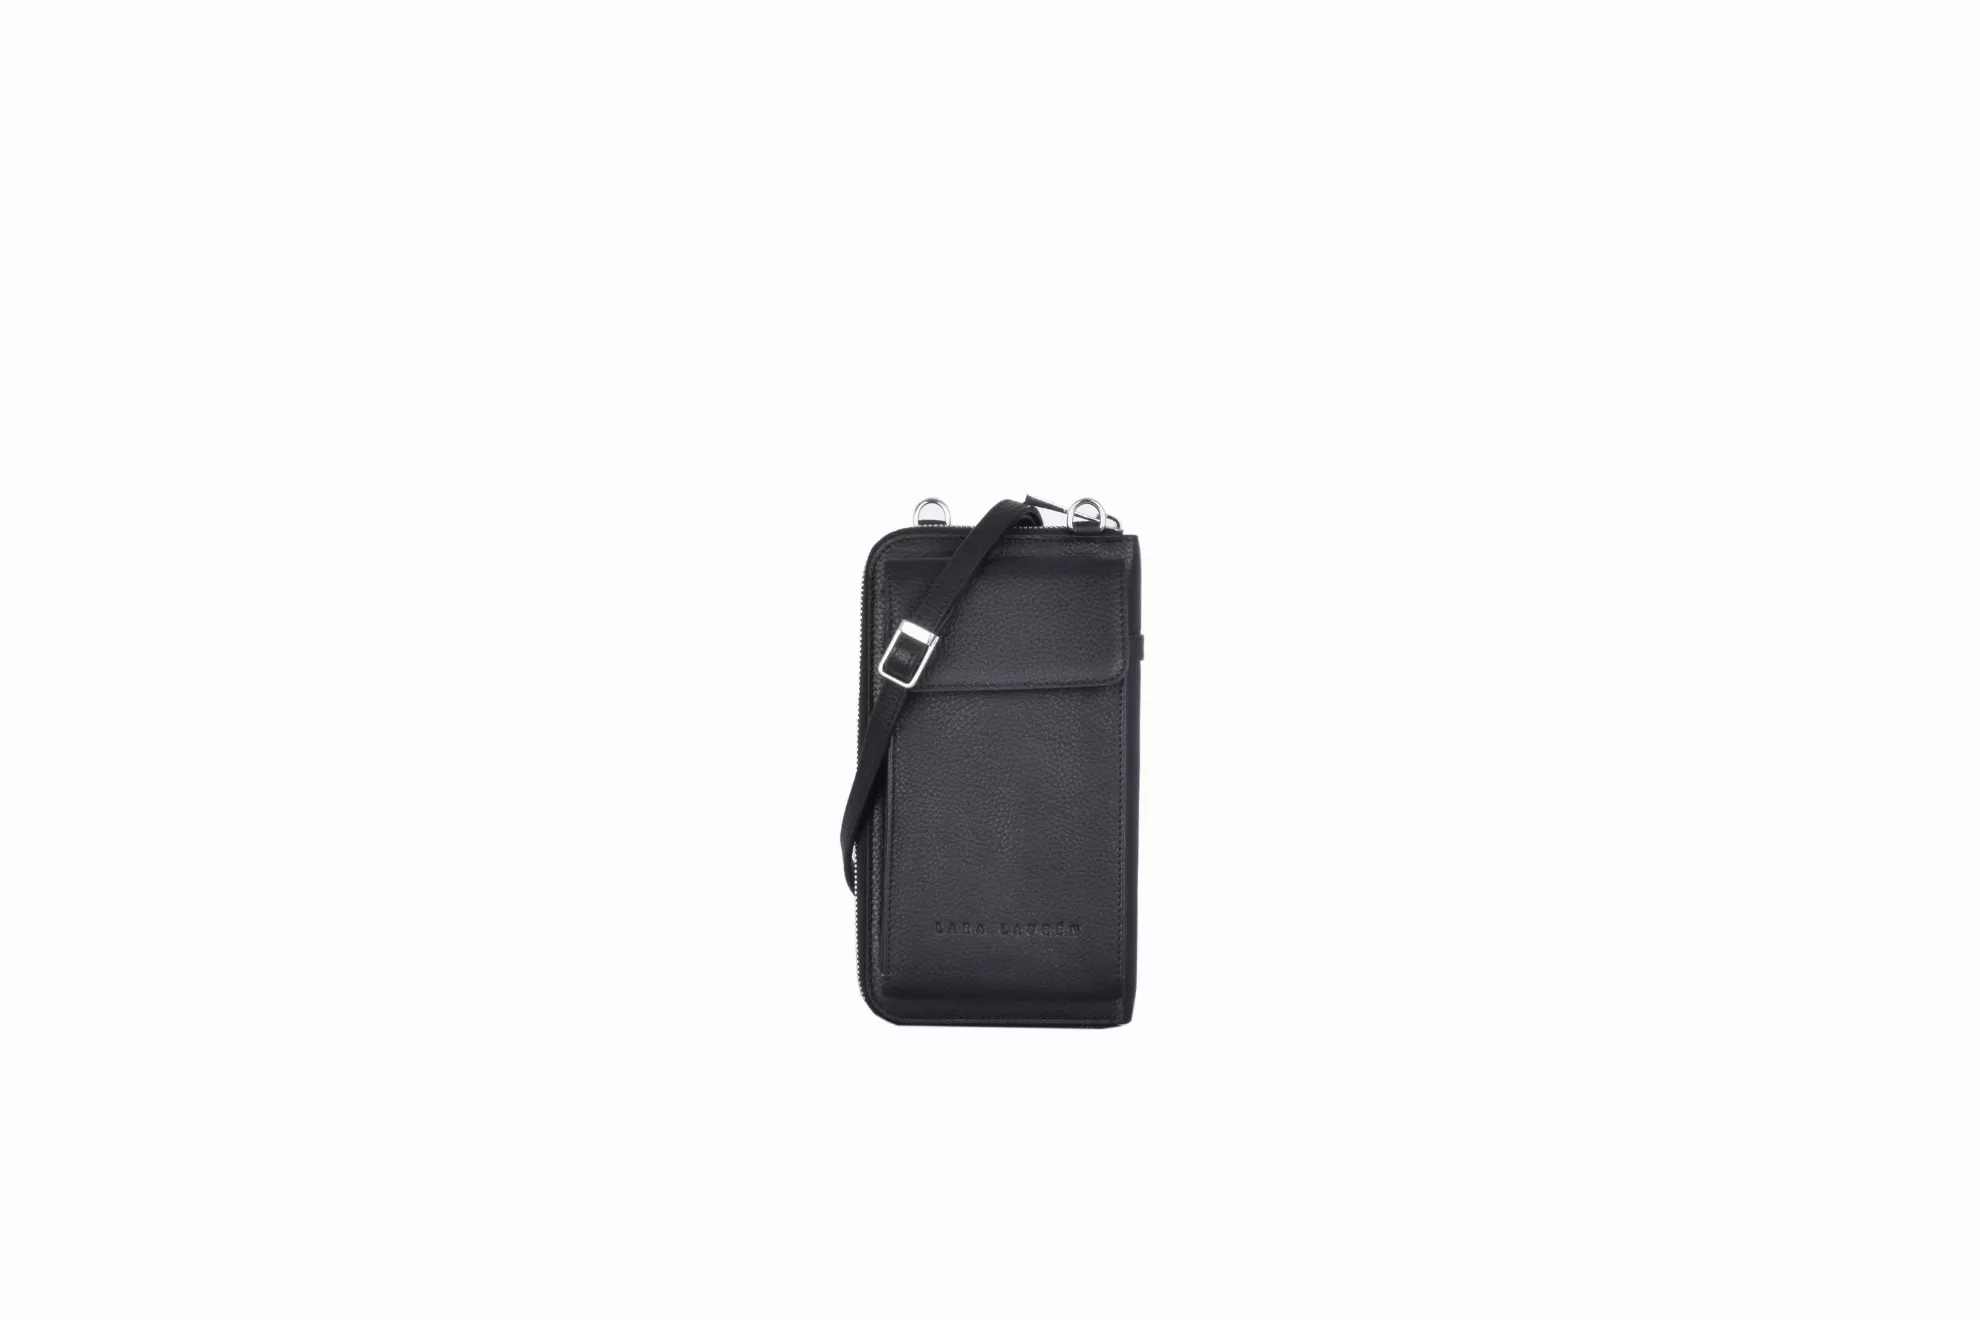 City Wallet A Mobilebag, black